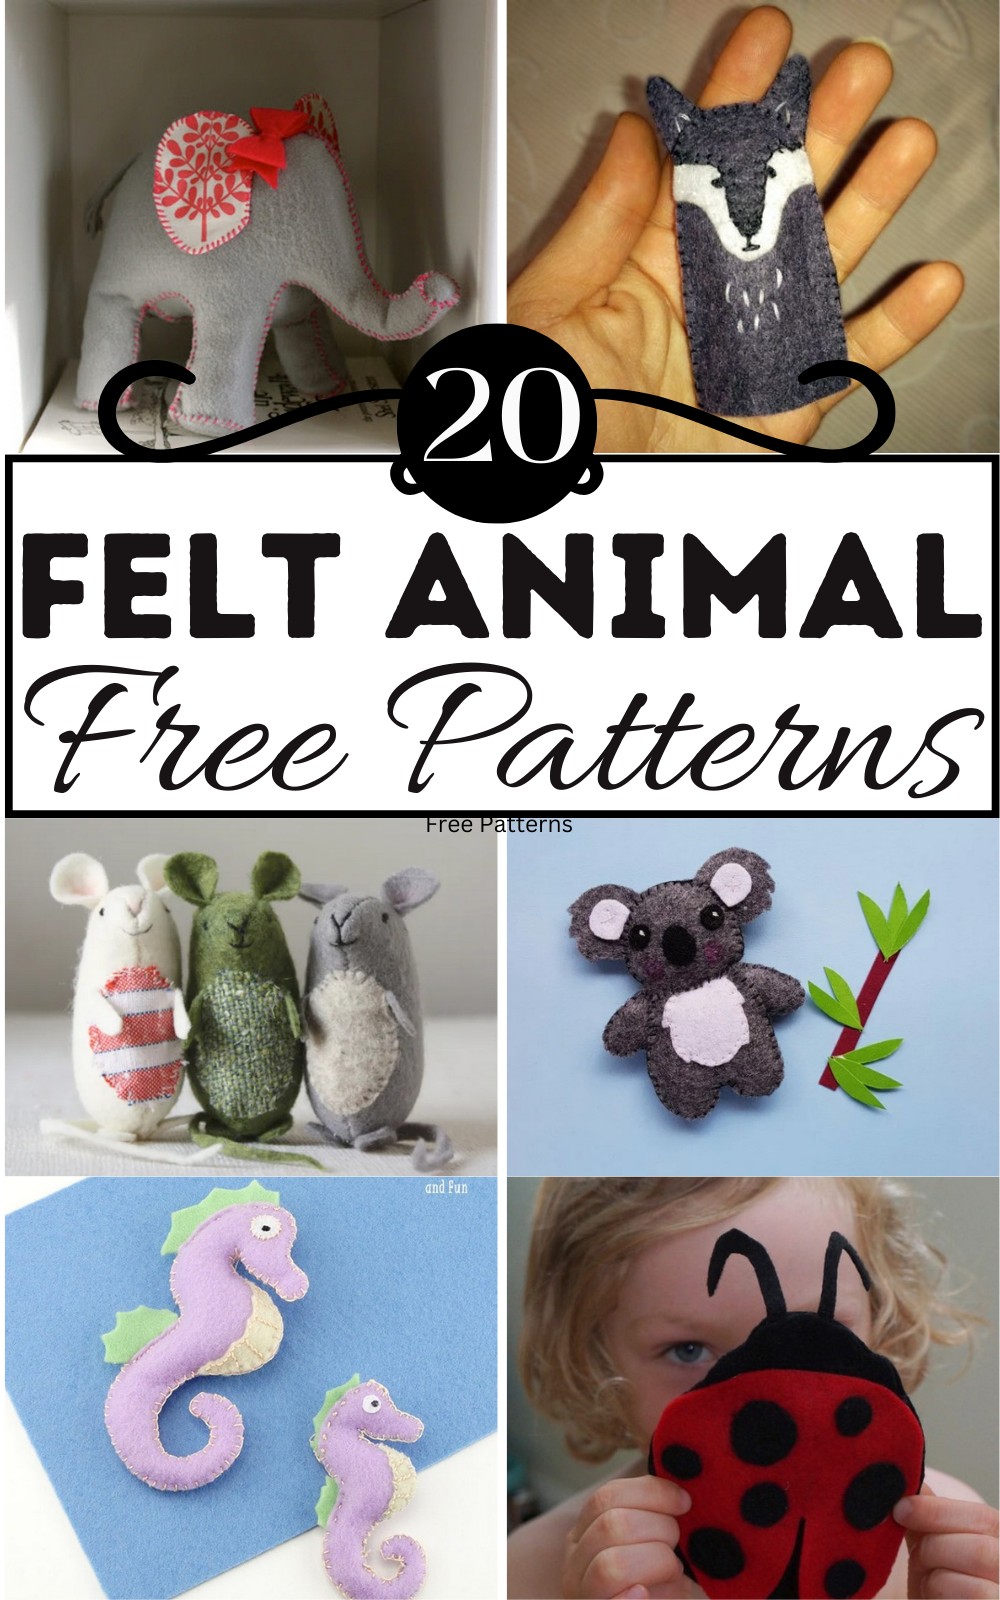 Free Felt Animal Patterns 2